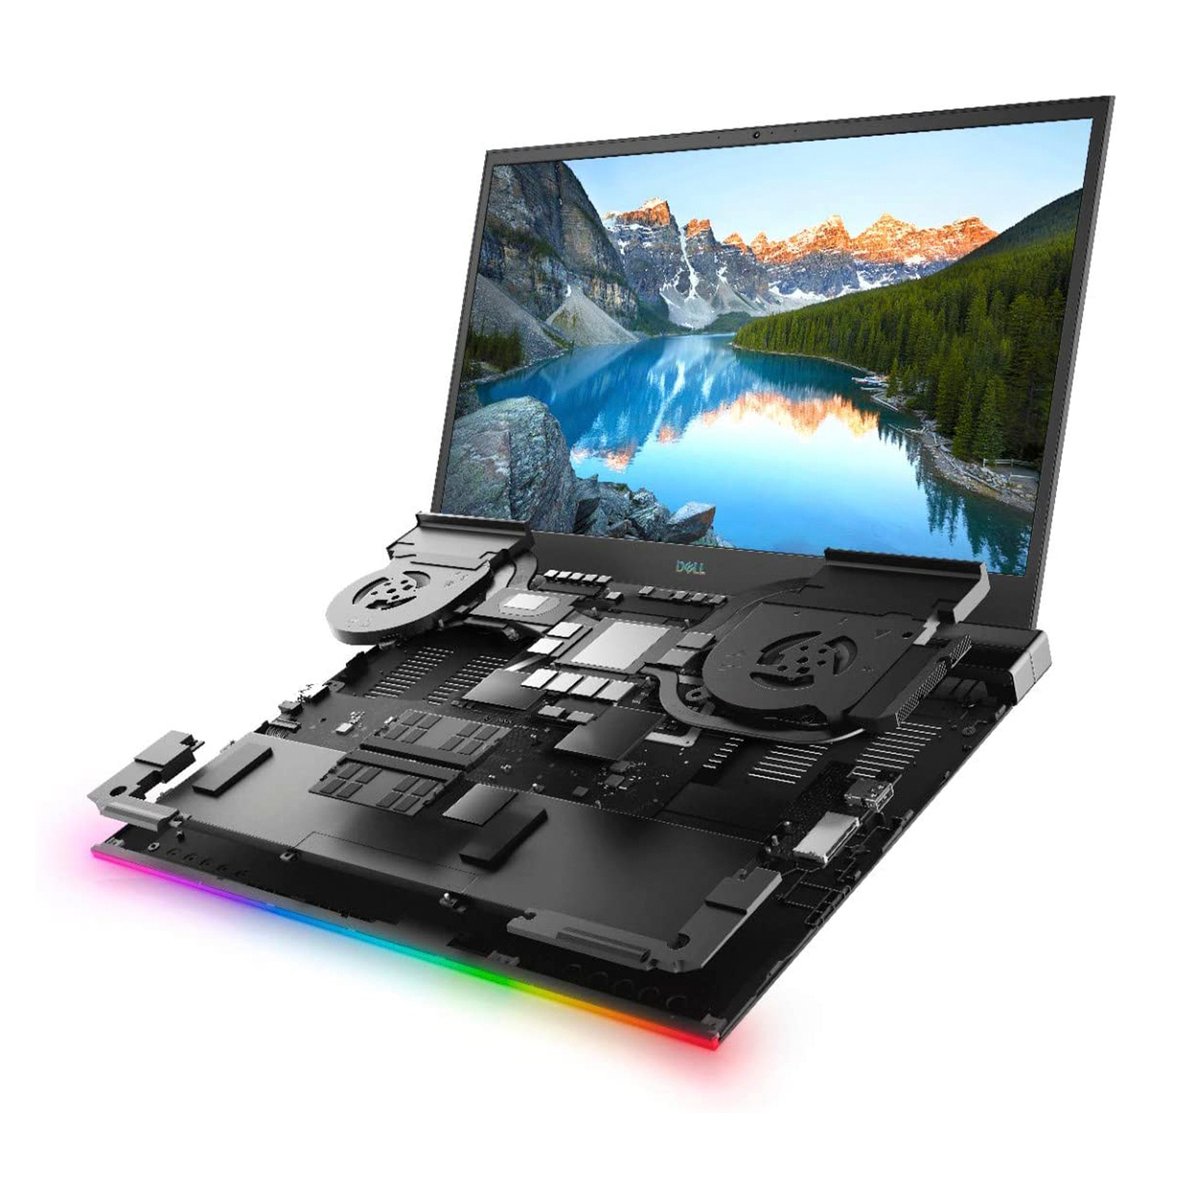 Dell G7 17 7700 Gaming Laptop 17.3 inch FHD 1920 x 1080, 144Hz,9ms Display Intel Core i7-10750H 5.0 GHz,16GB Ram,1TB SSD,8GB GeForce RTX 2070,Eng-Arabic RGB KB,Windows 10 Home,Black